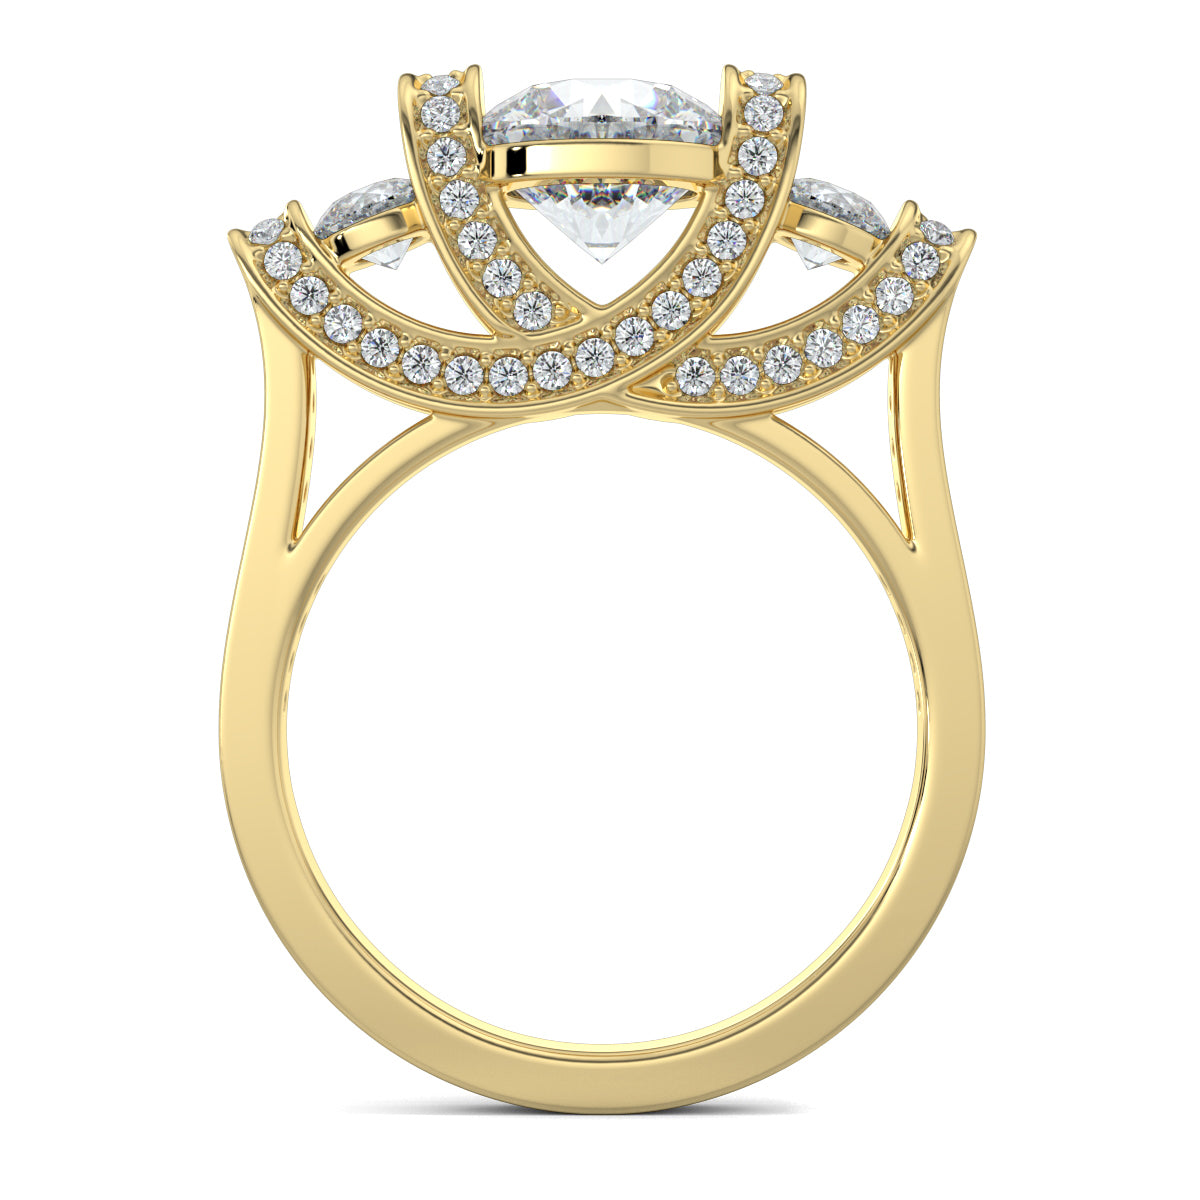 Yellow Gold, Diamond Ring, Enigma solitaire ring, natural diamonds, lab-grown diamonds, trellis band, round diamonds, elegant jewelry